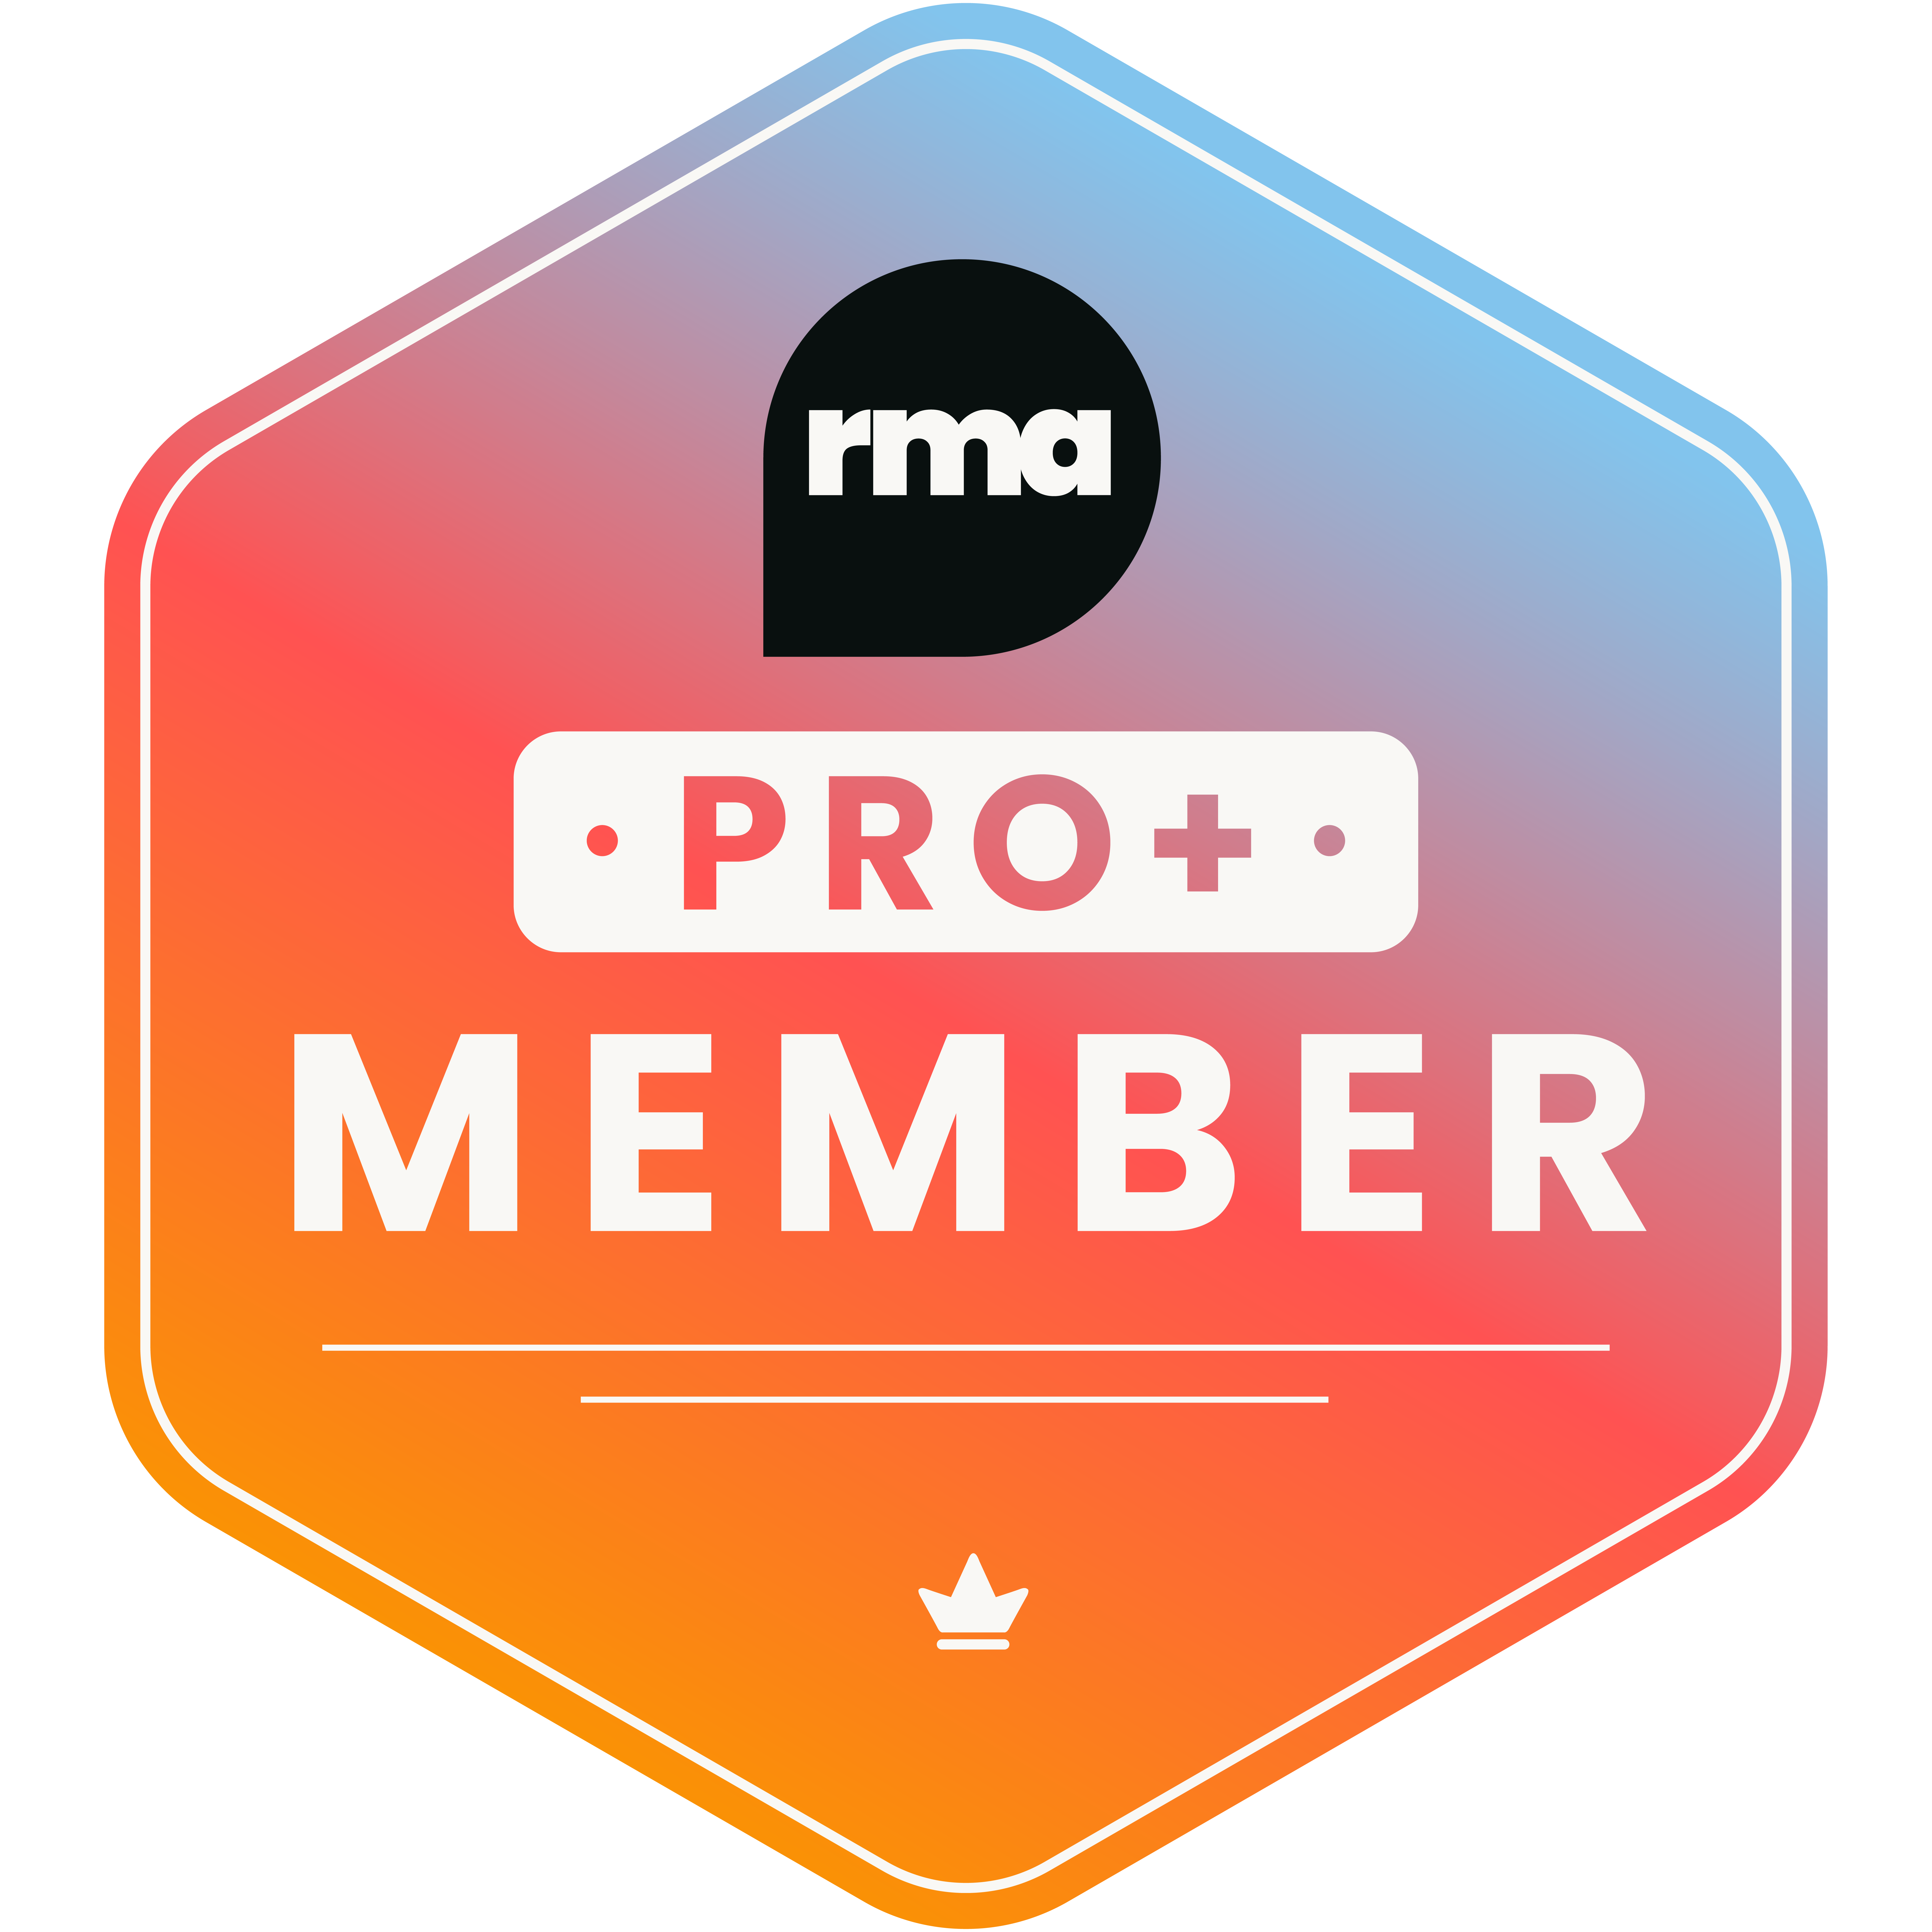 revenue marketing alliance pro plus membership badge